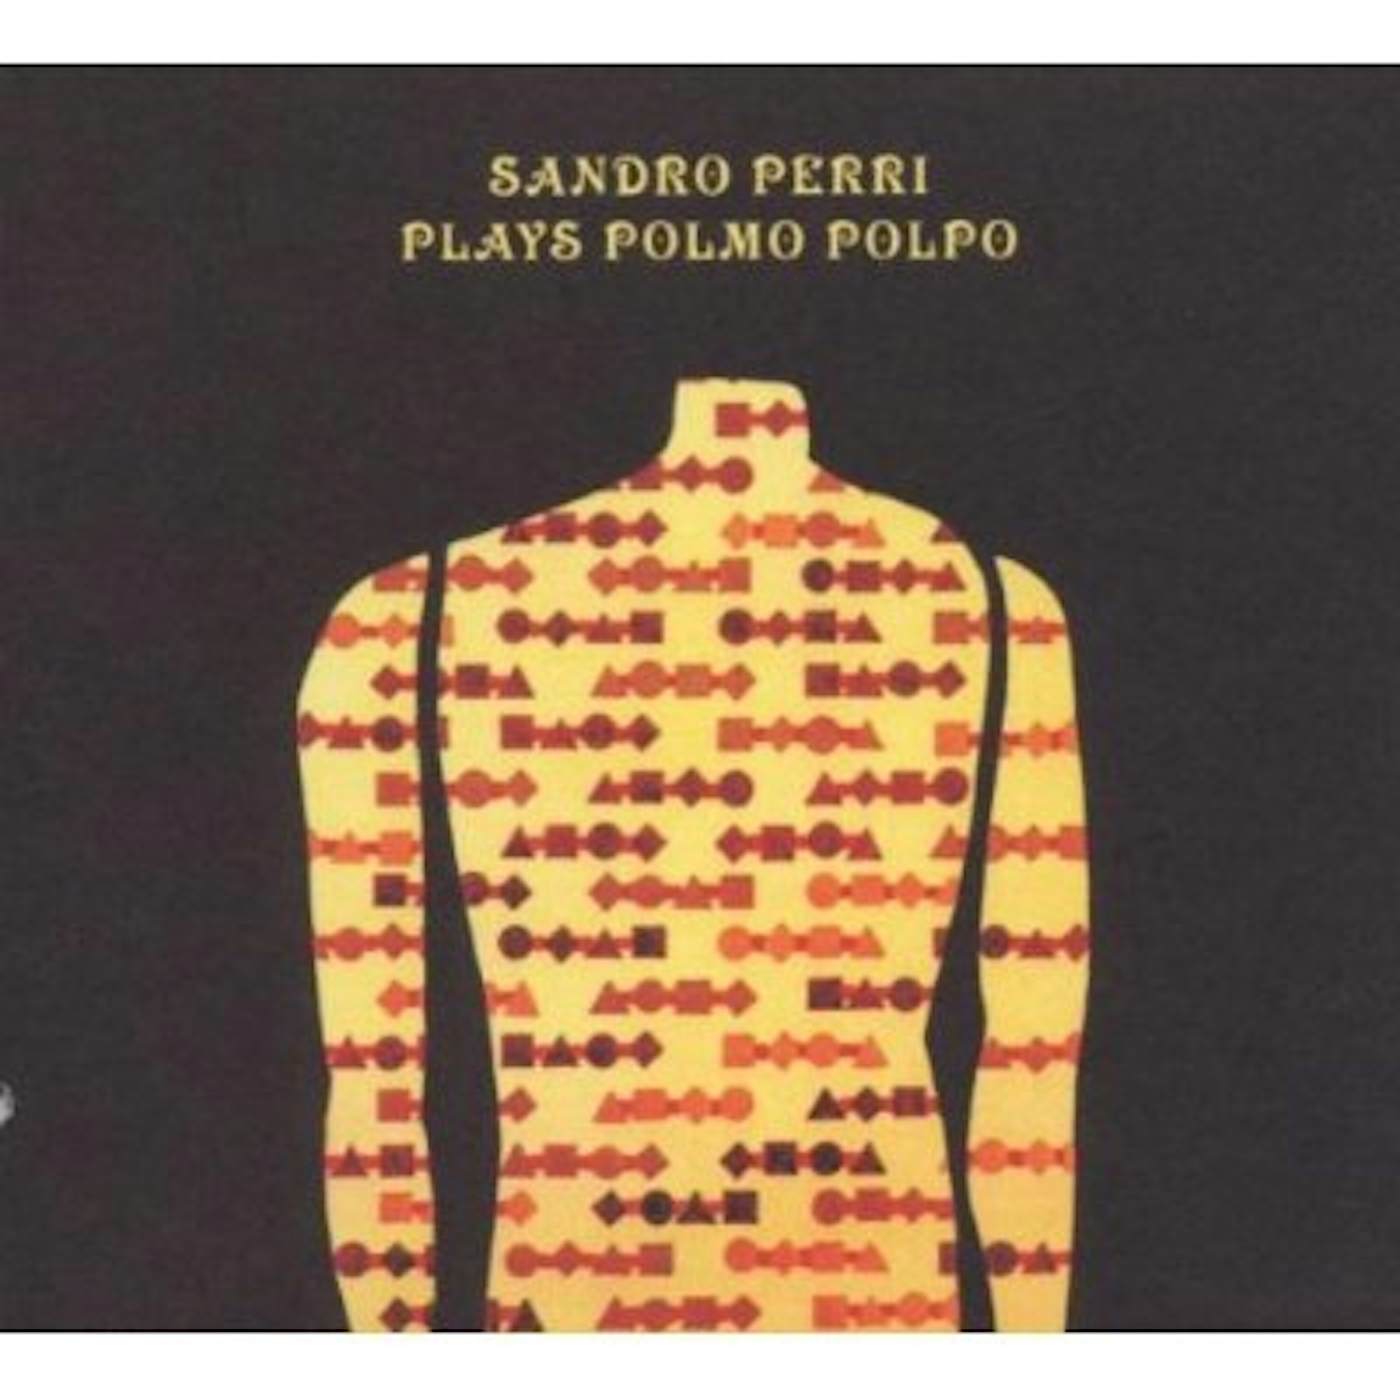 Sandro Perri PLAYS POLMO POLPO CD